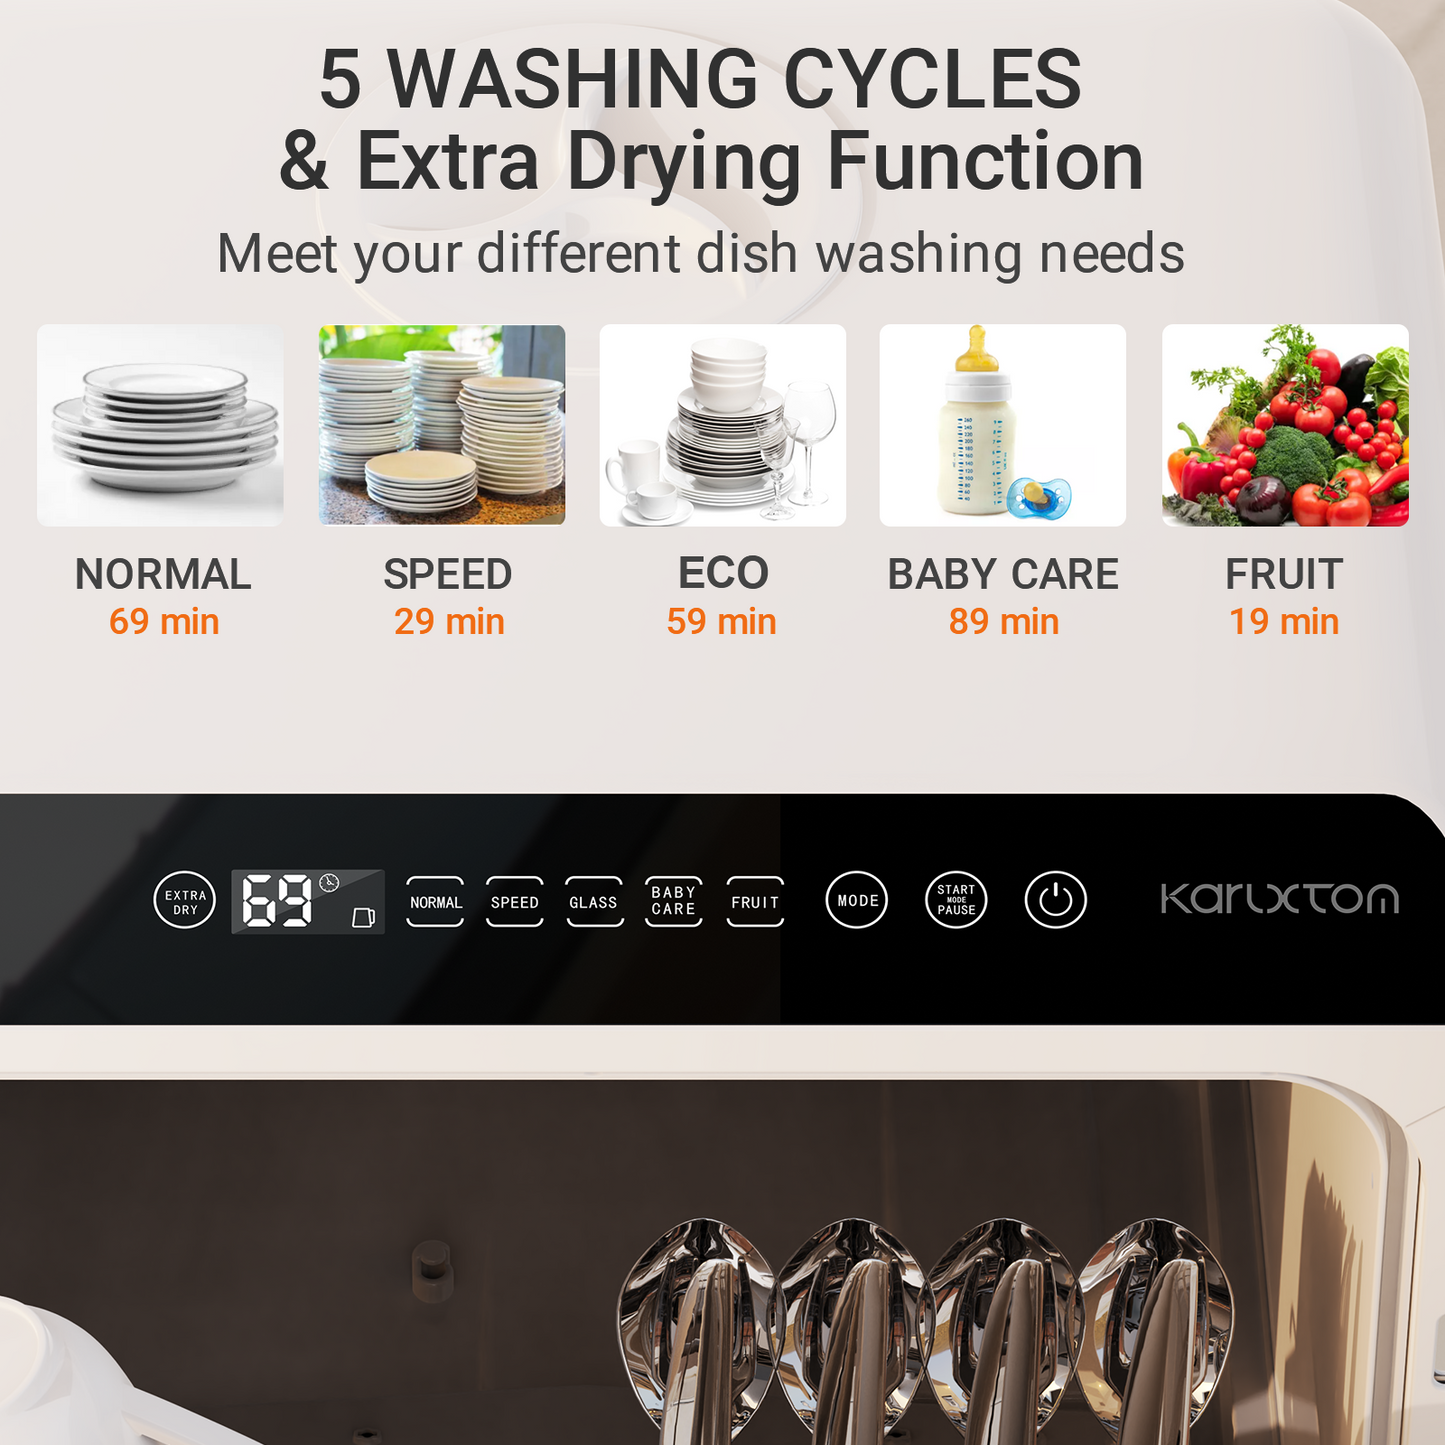 Karlxtom Portable Countertop Dishwasher-Provides Five-Year Warranty